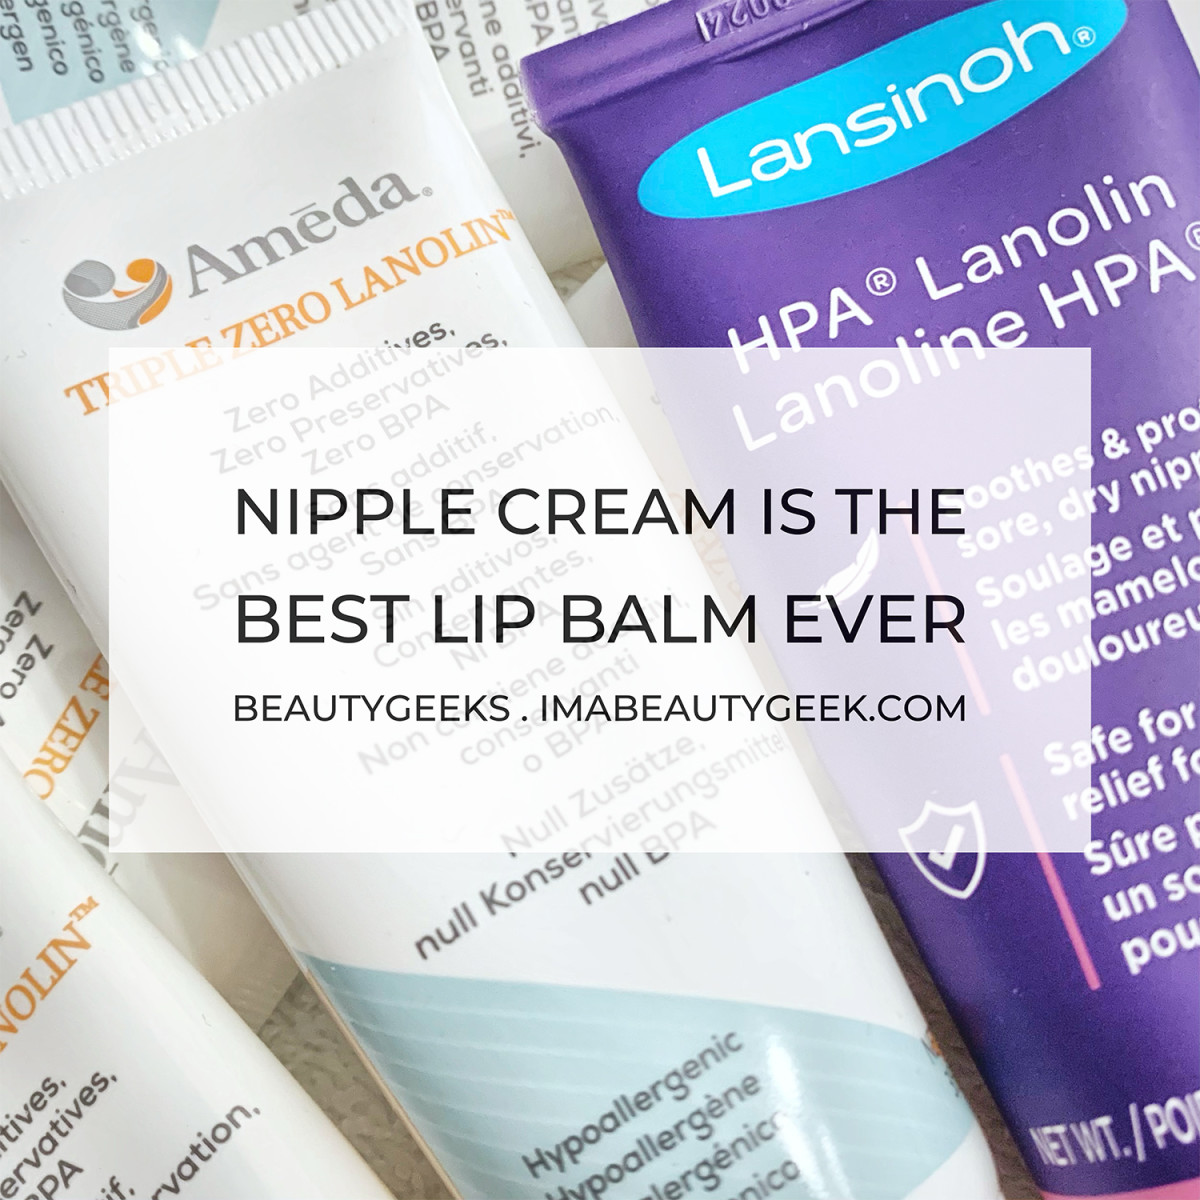 Nipple Cream is the best lip balm ever